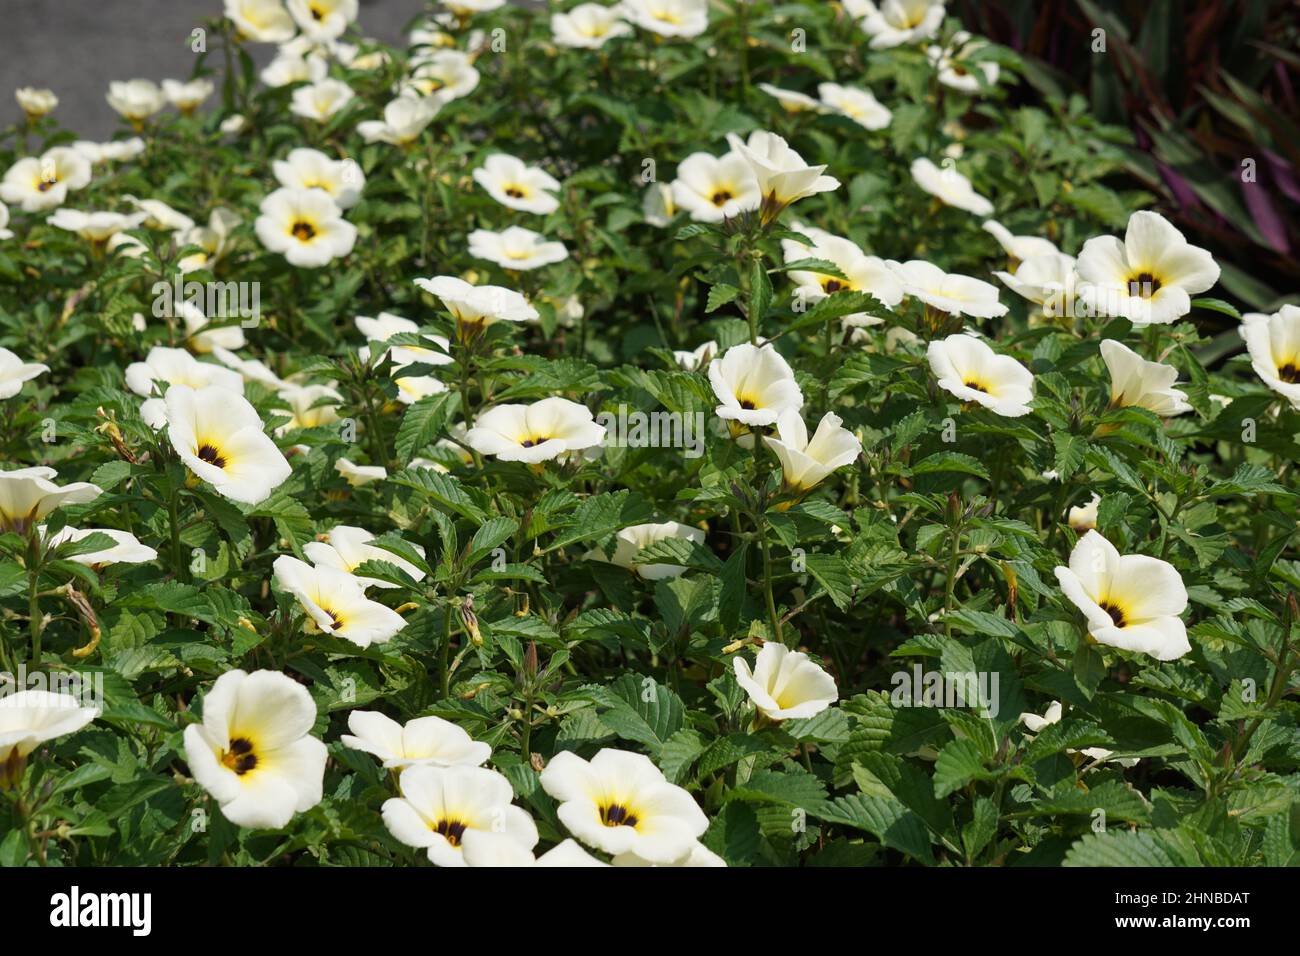 Turnera subulata (Also called yolanda, Turnera subulata, white buttercup, sulphur alder, politician's flower, dark-eyed turnera, white alder) flower. Stock Photo